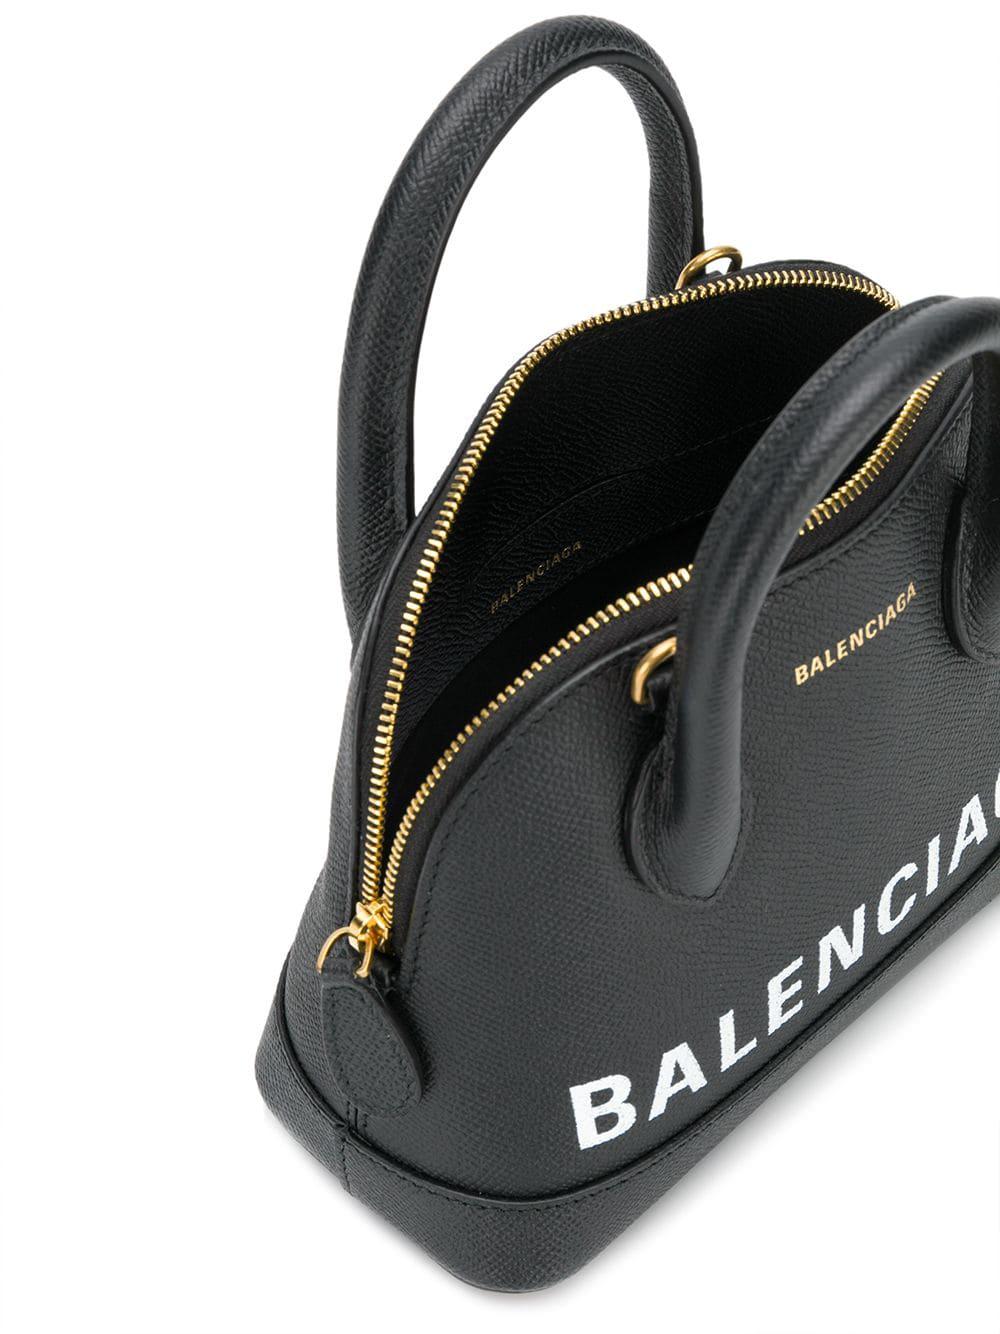 Balenciaga Ville Xxs Leather Top Handle Bag in Black - Lyst